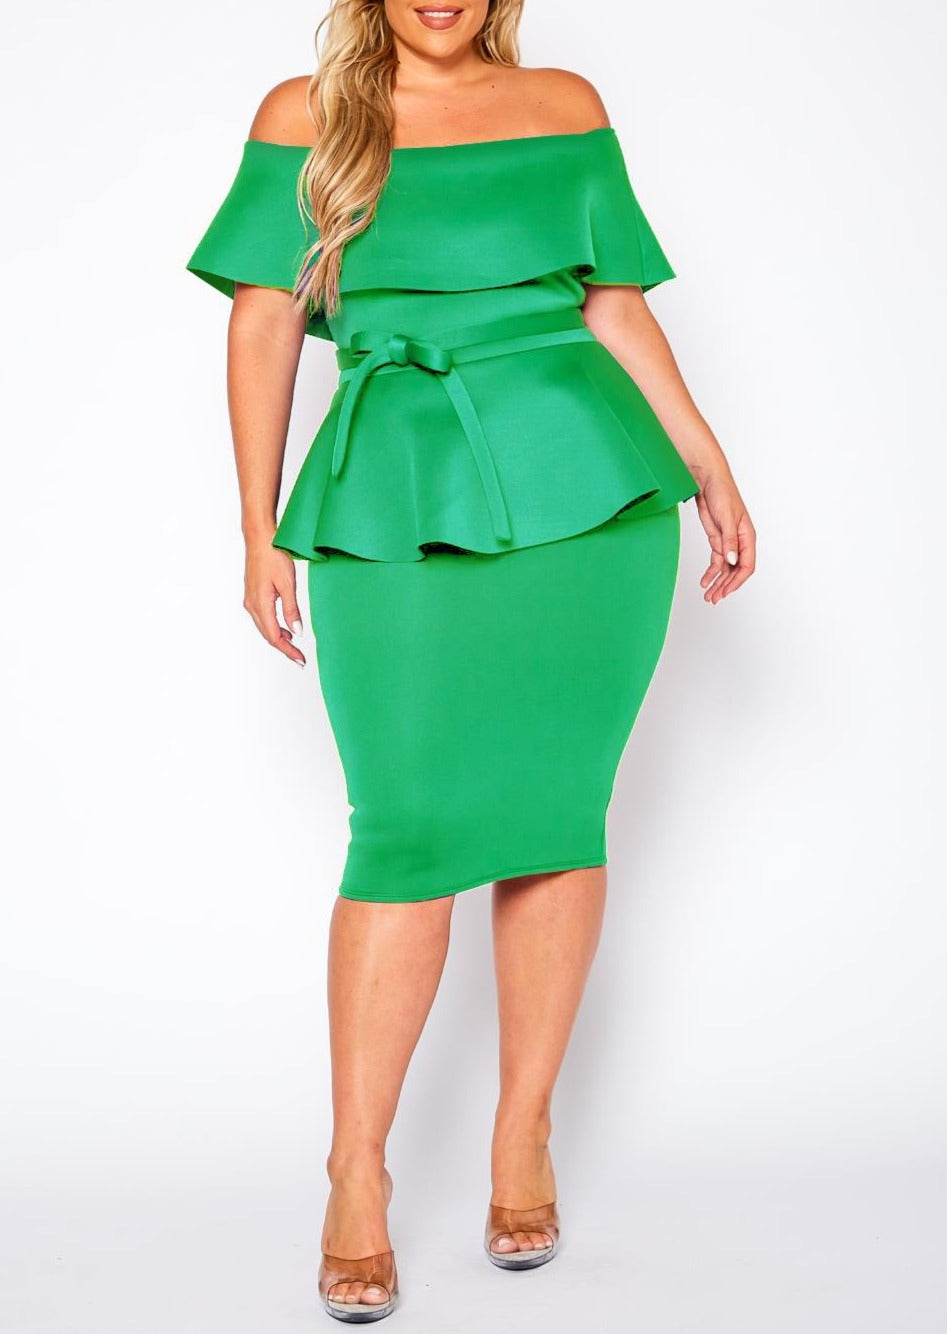 HI Curvy Plus Size Women Off Shoulder Peplum Midi Dress Made In USA